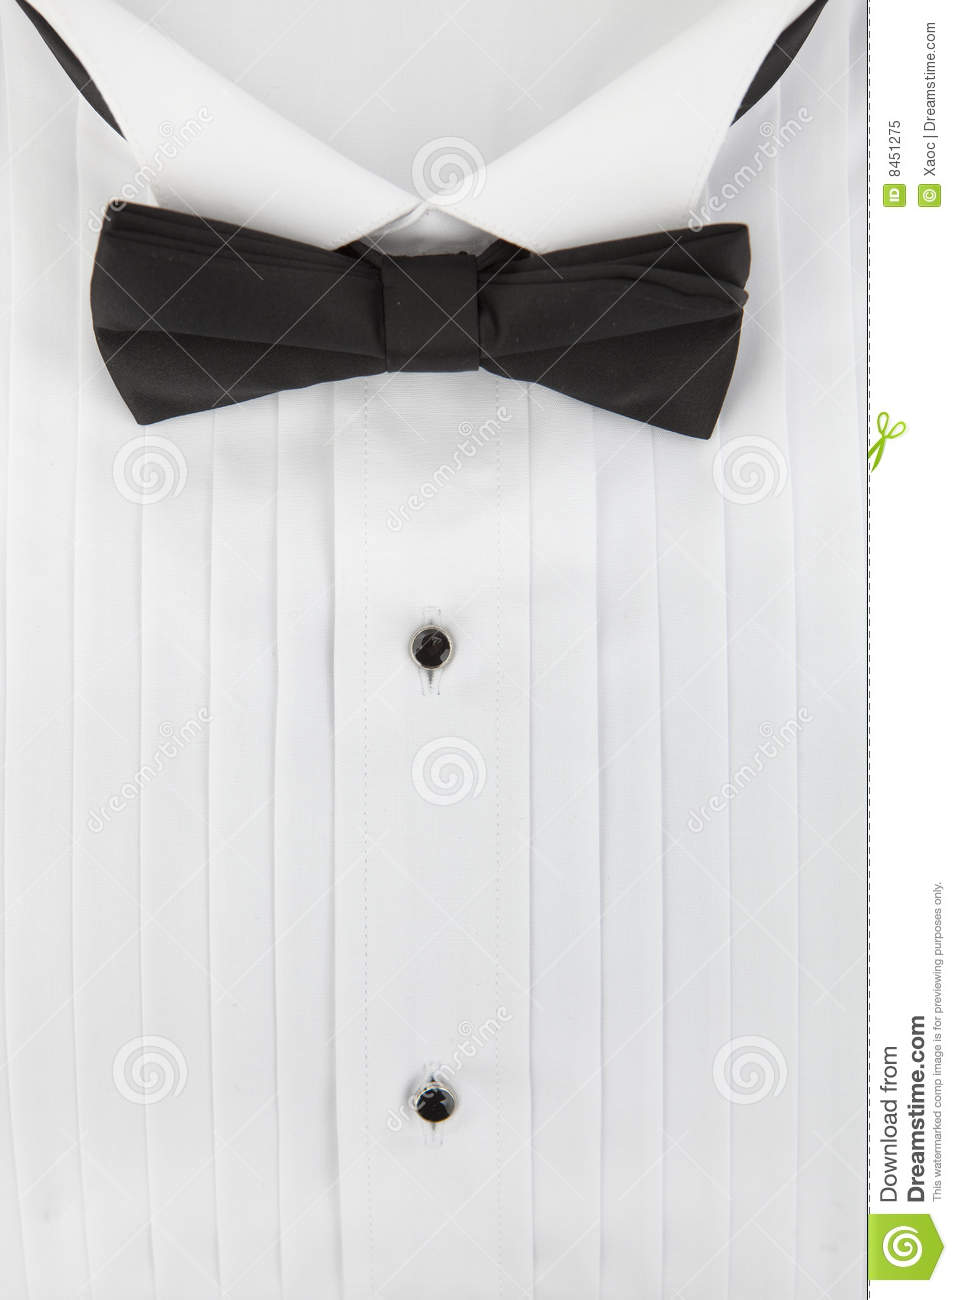 Tuxedo Shirt And Bowtie Close Up Royalty Free Stock Photo   Image